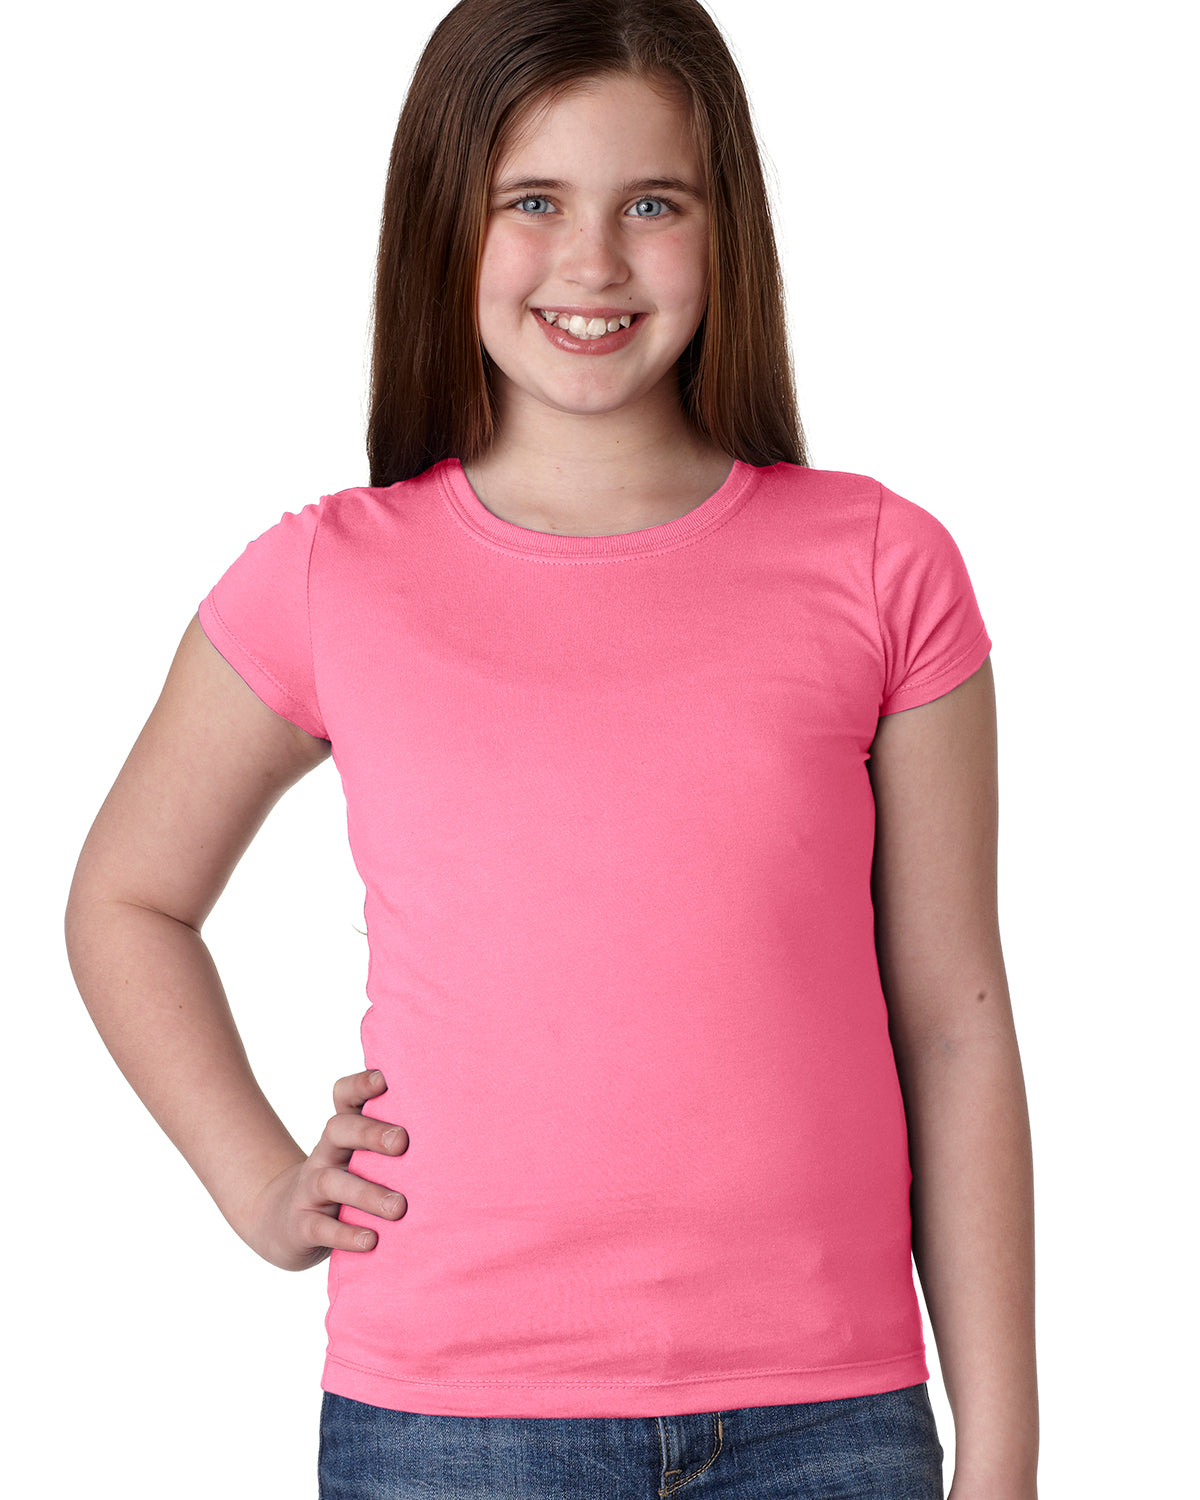 Girls’ Princess T-Shirt Soft Cotton Next Level N3710